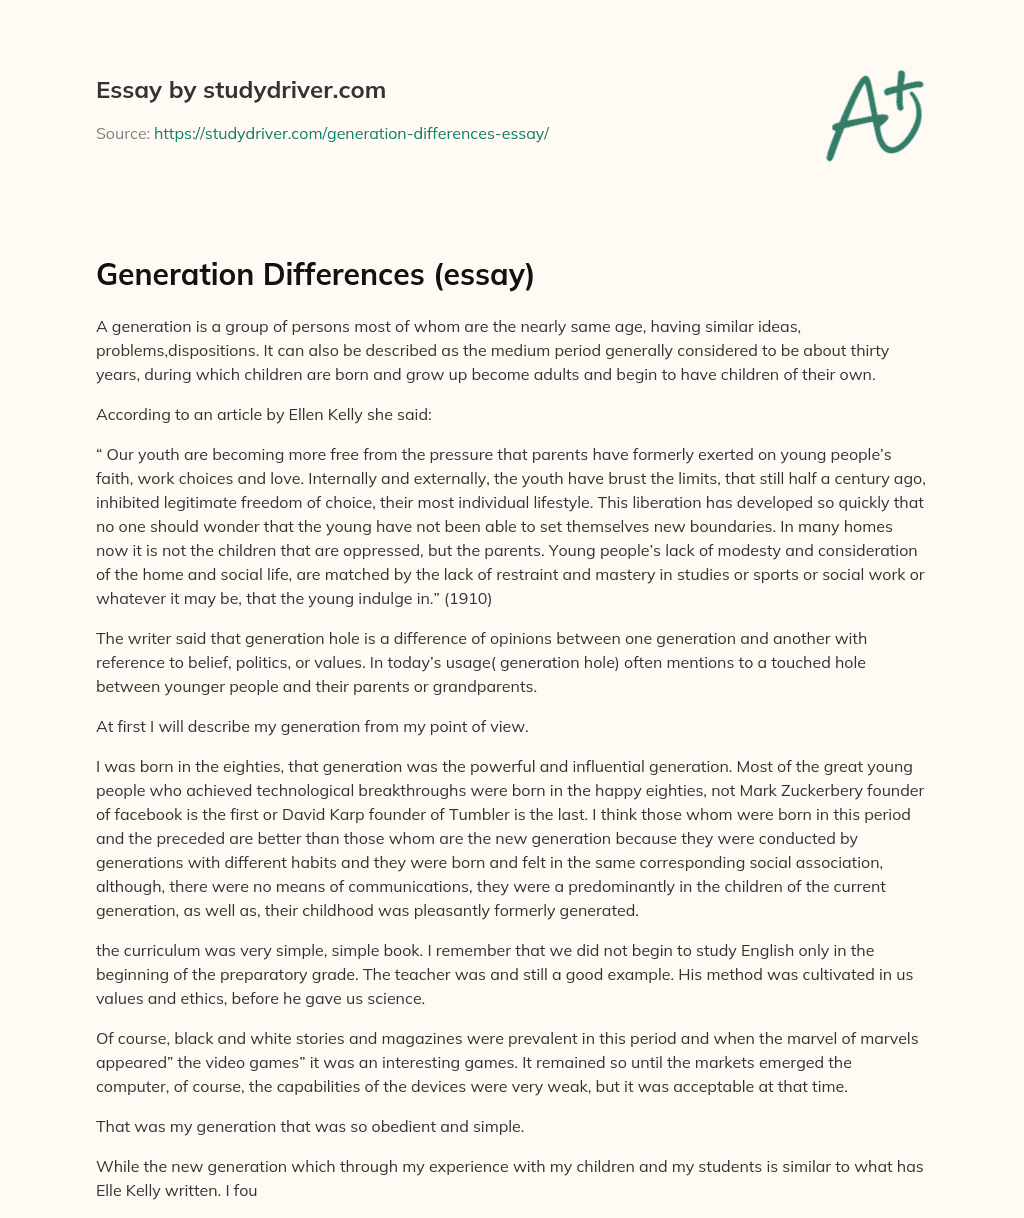 Generation Differences (essay) essay